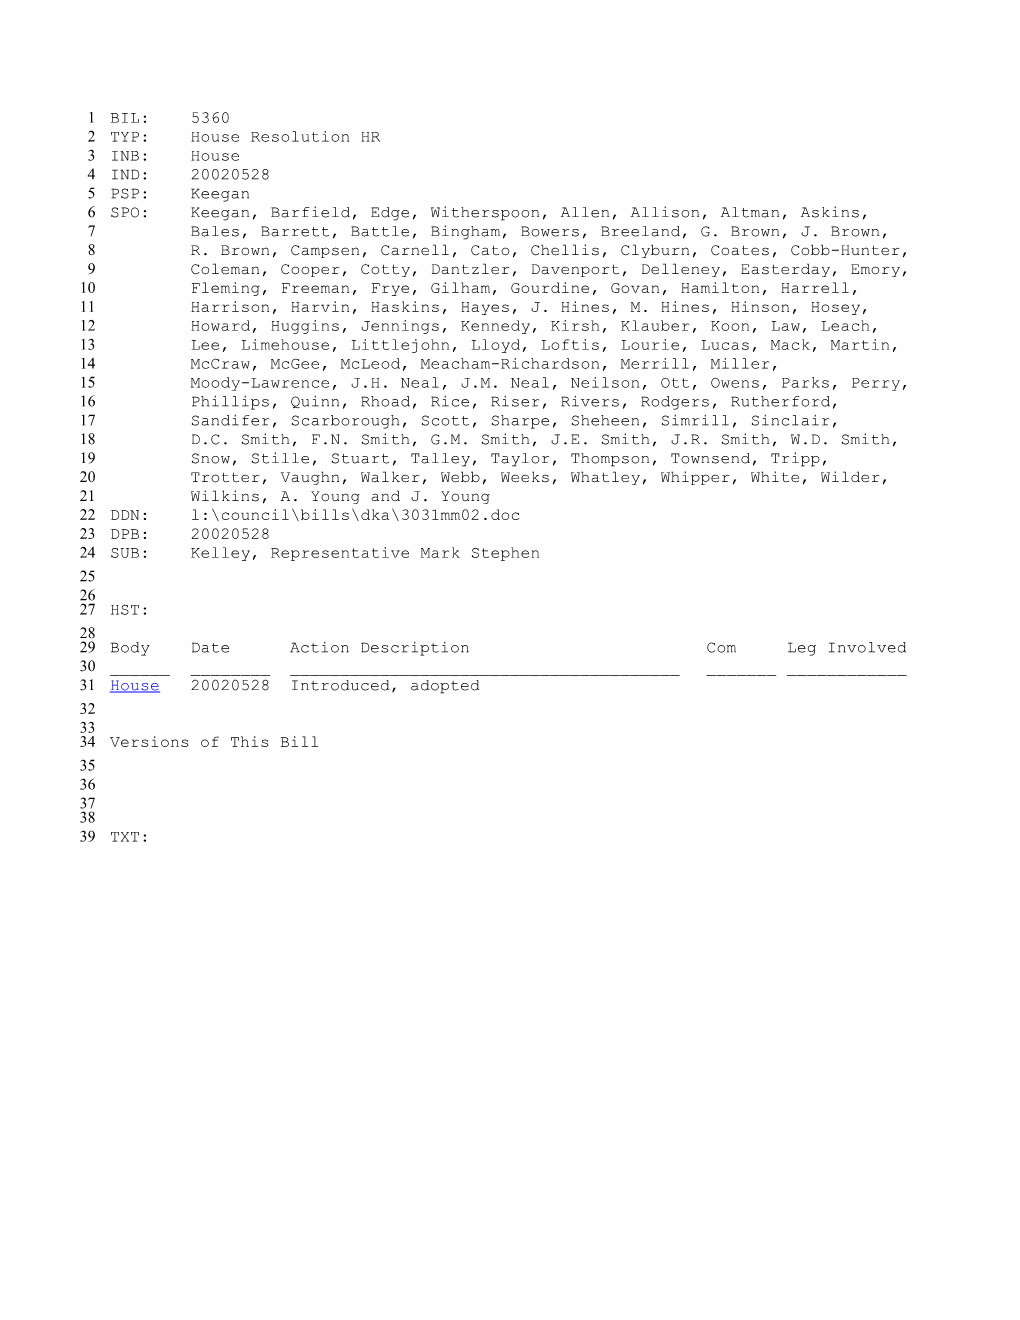 2001-2002 Bill 5360: Kelley, Representative Mark Stephen - South Carolina Legislature Online